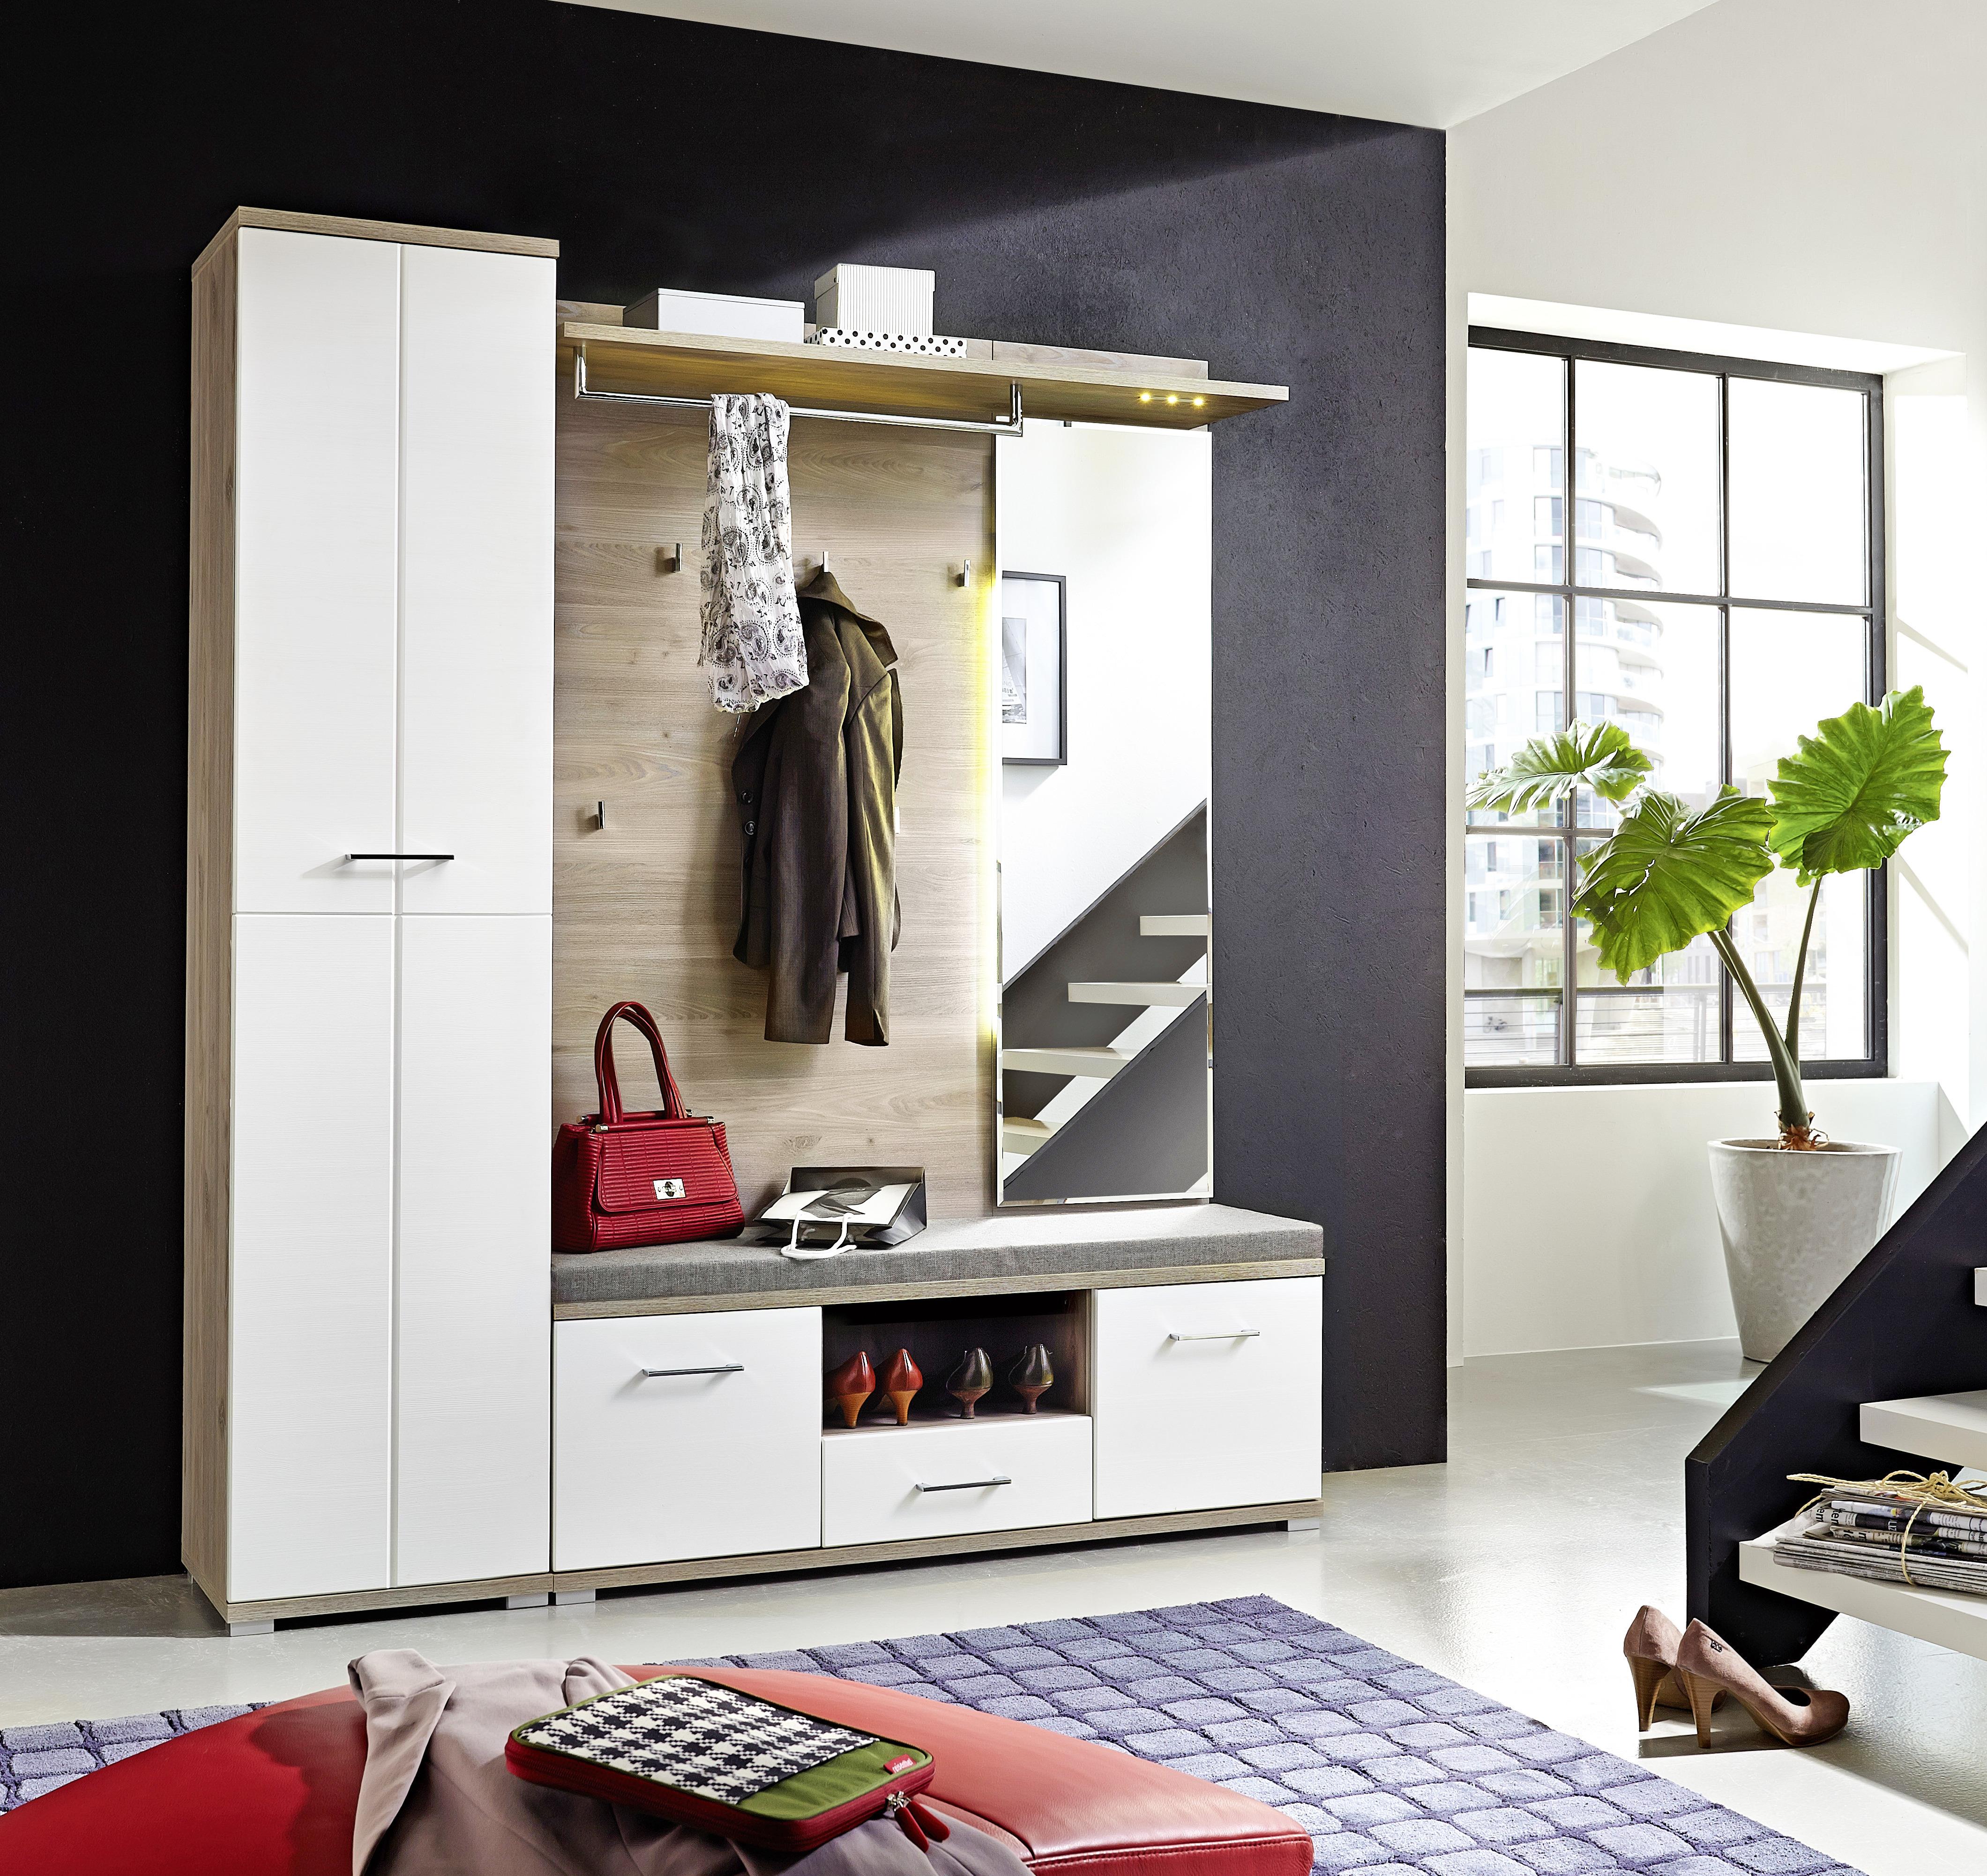 Šatní Skříň Plus - bílá/barvy chromu, Moderní, kov/dřevo (47/199/39cm) - Premium Living